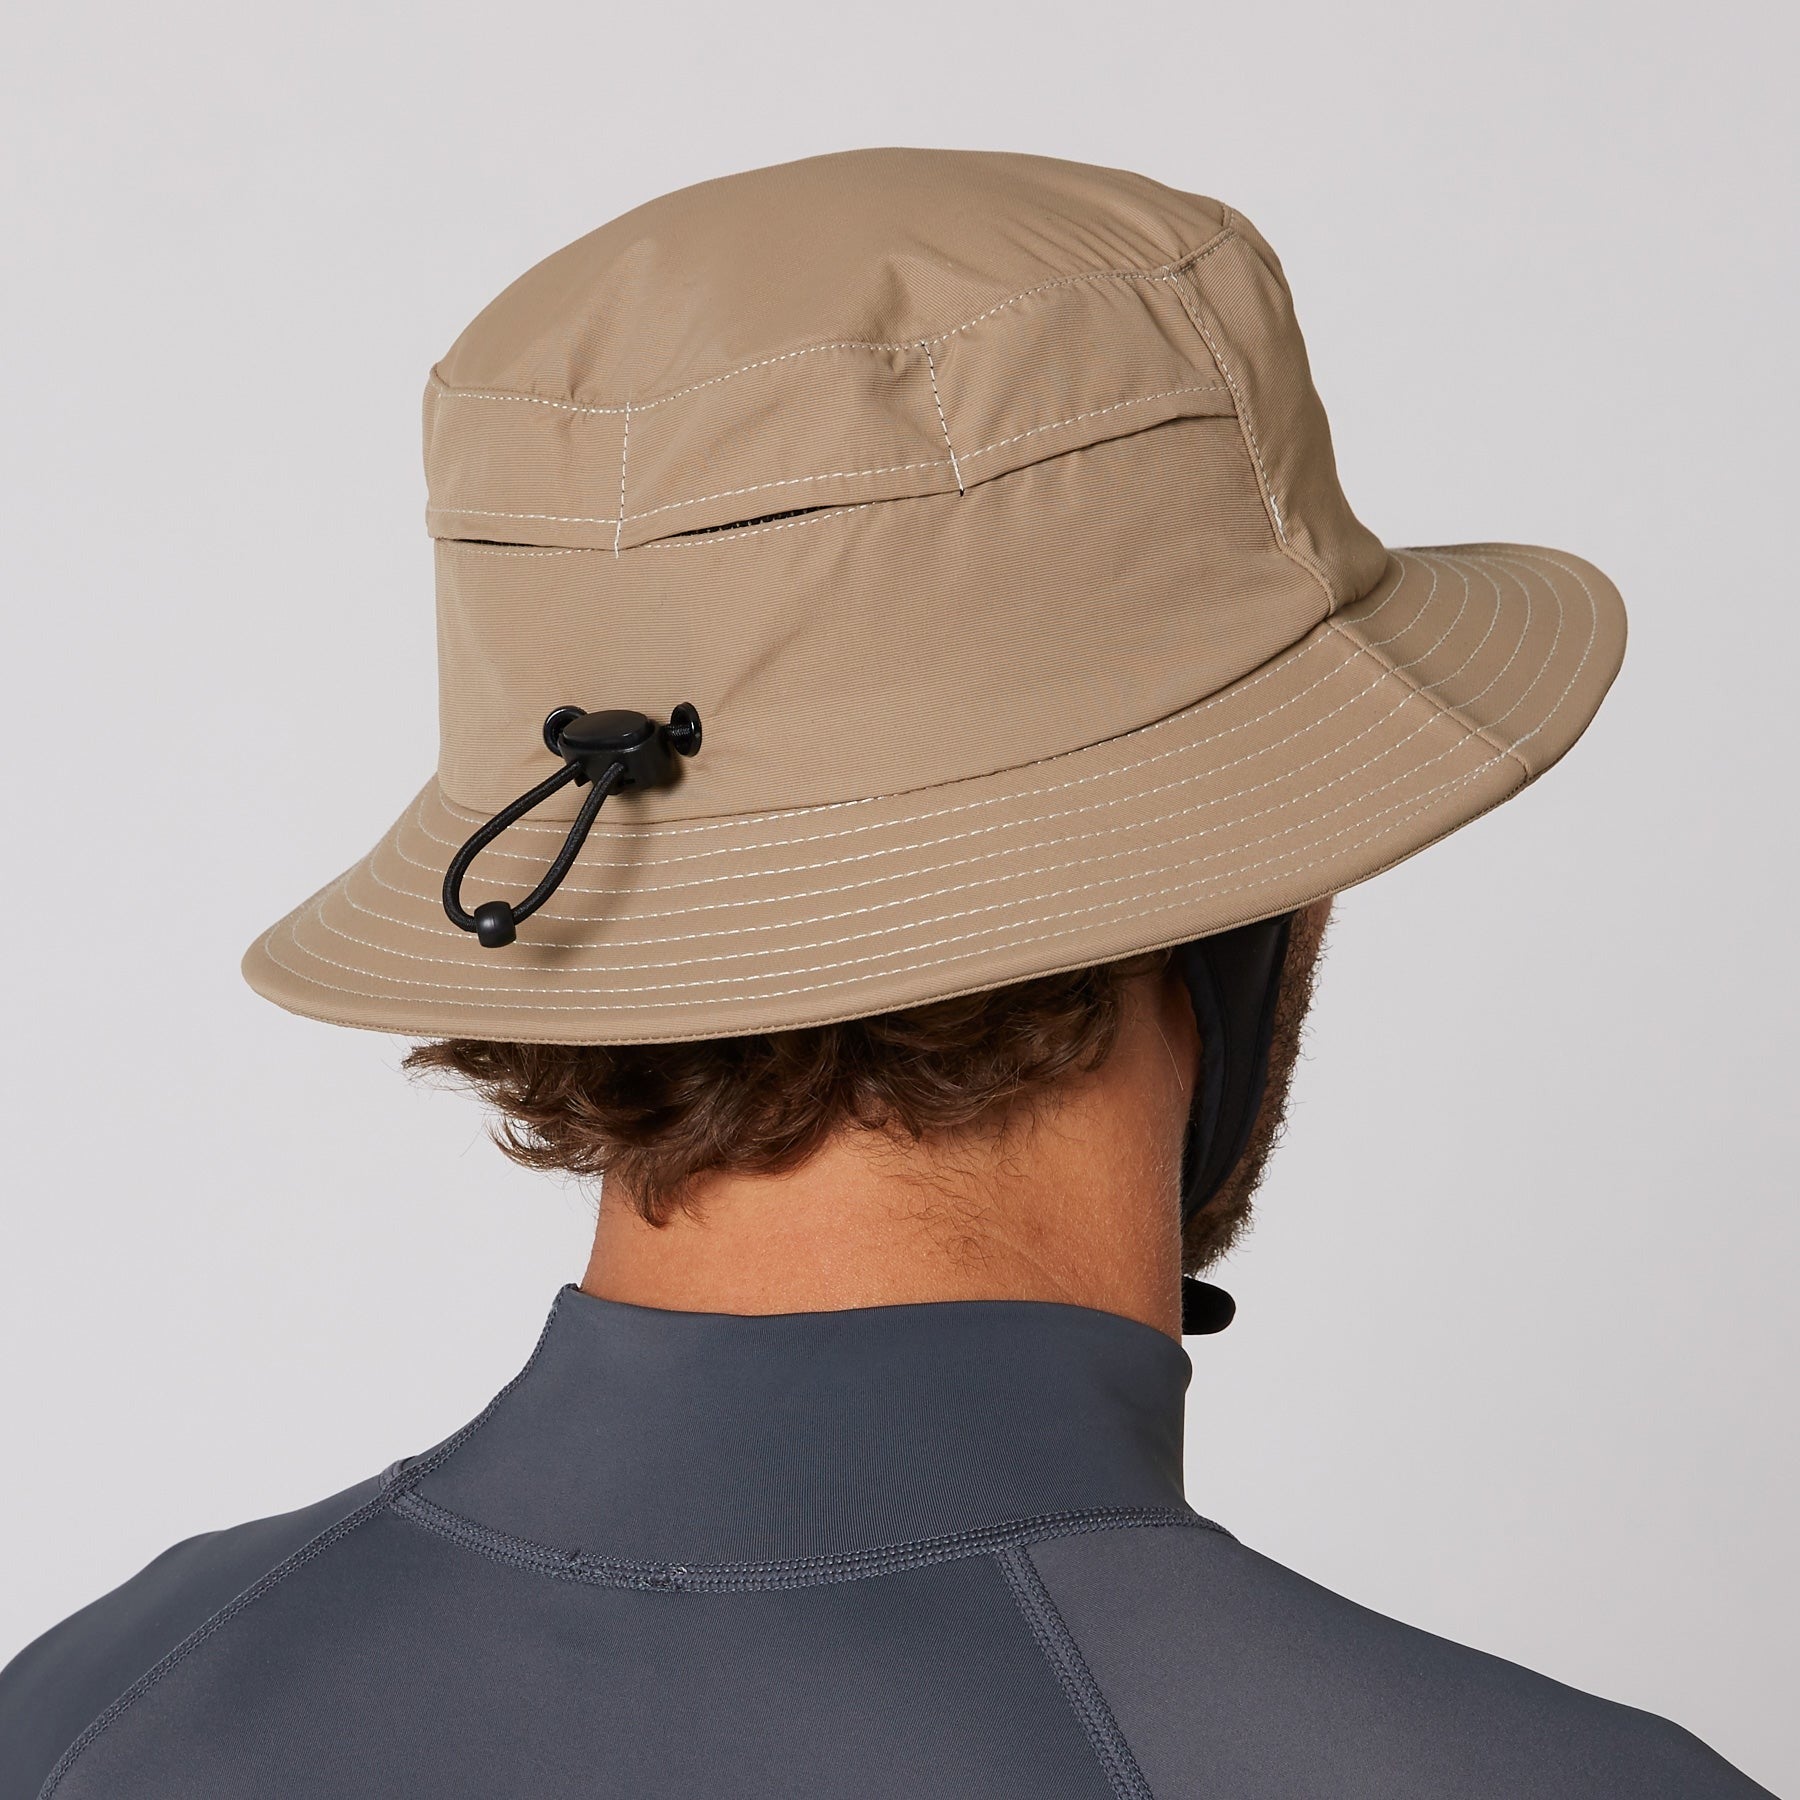 O&E G-Land Soft Peak Surf Hat